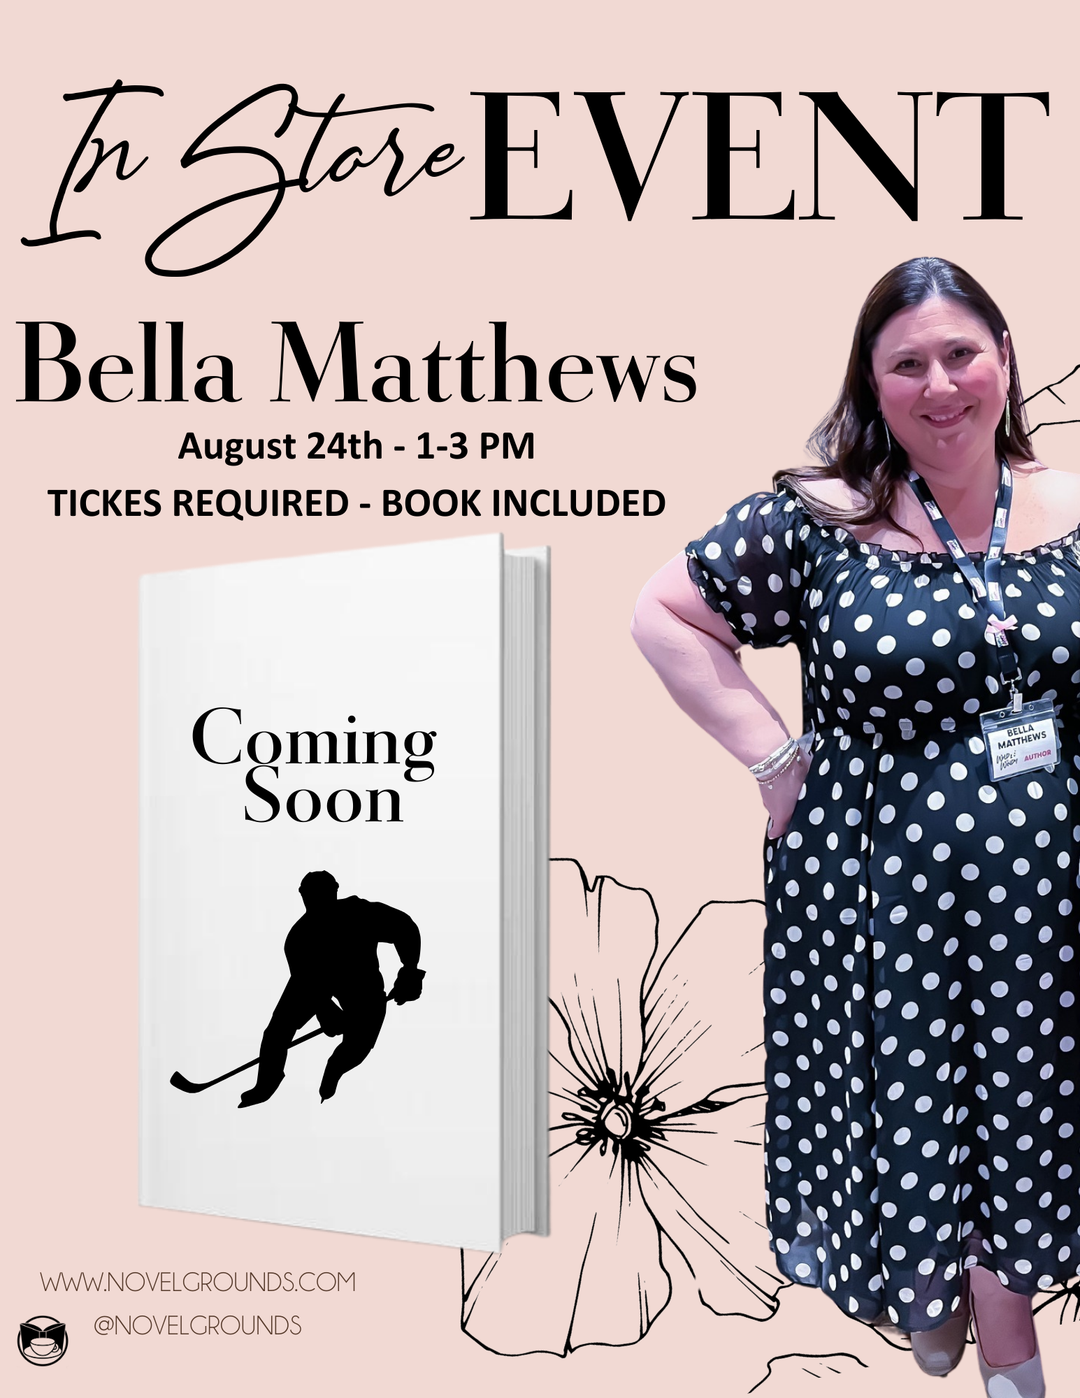 Bella Matthews Signing Event Ticket - August 24th - 1-3 pm